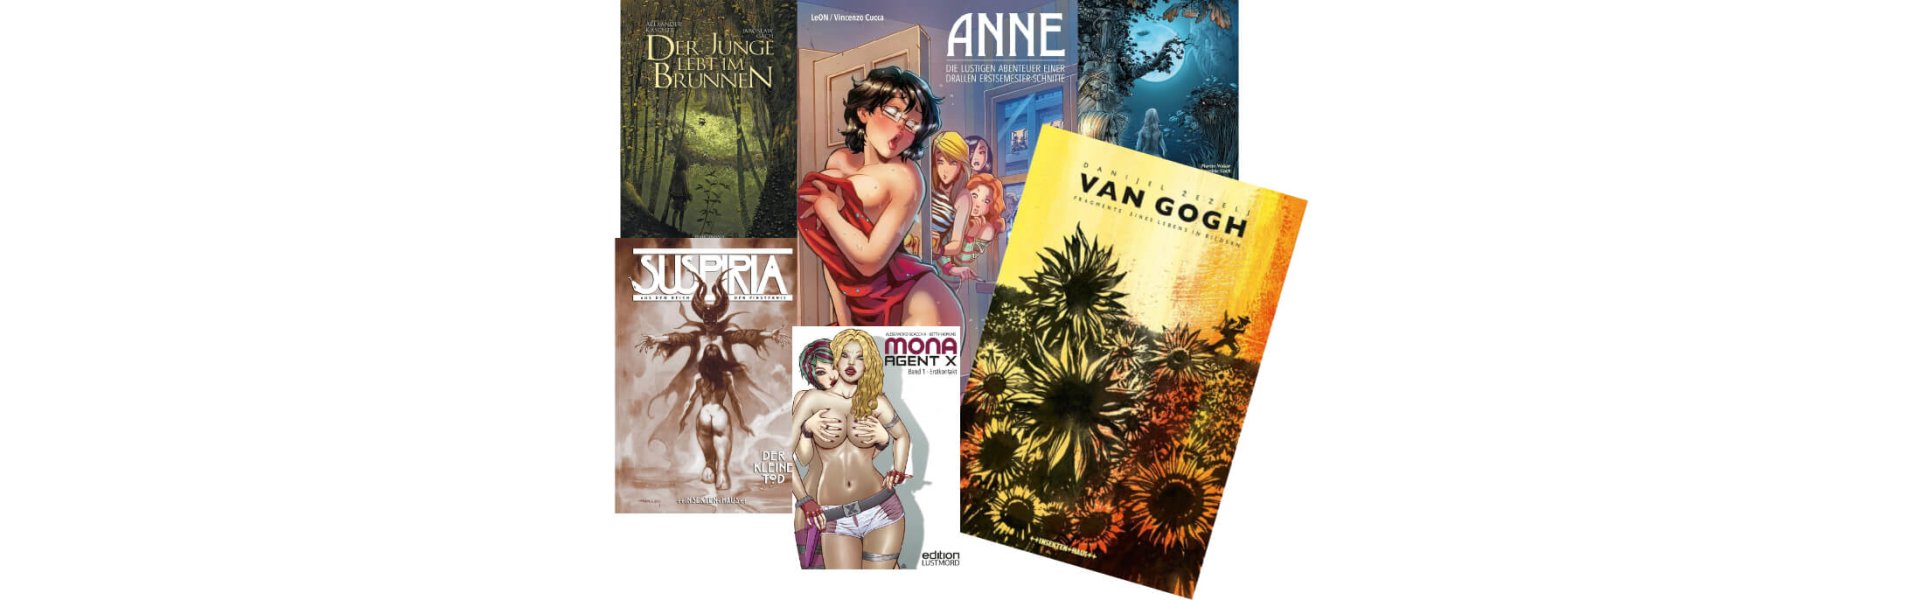 Graphic Novels & Comics